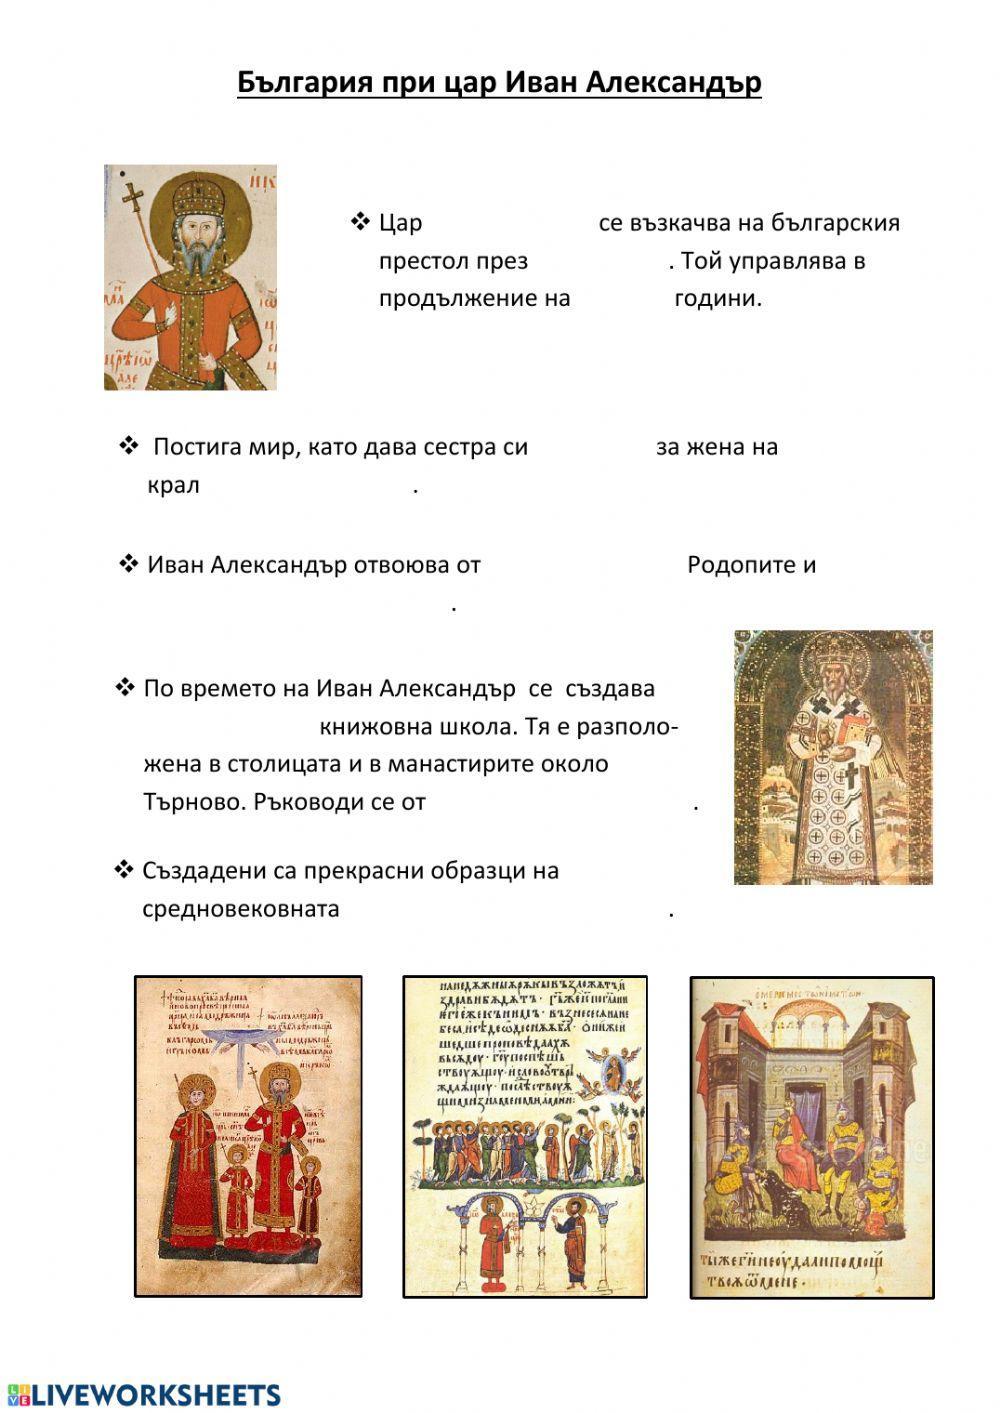 България при цар Иван Александър